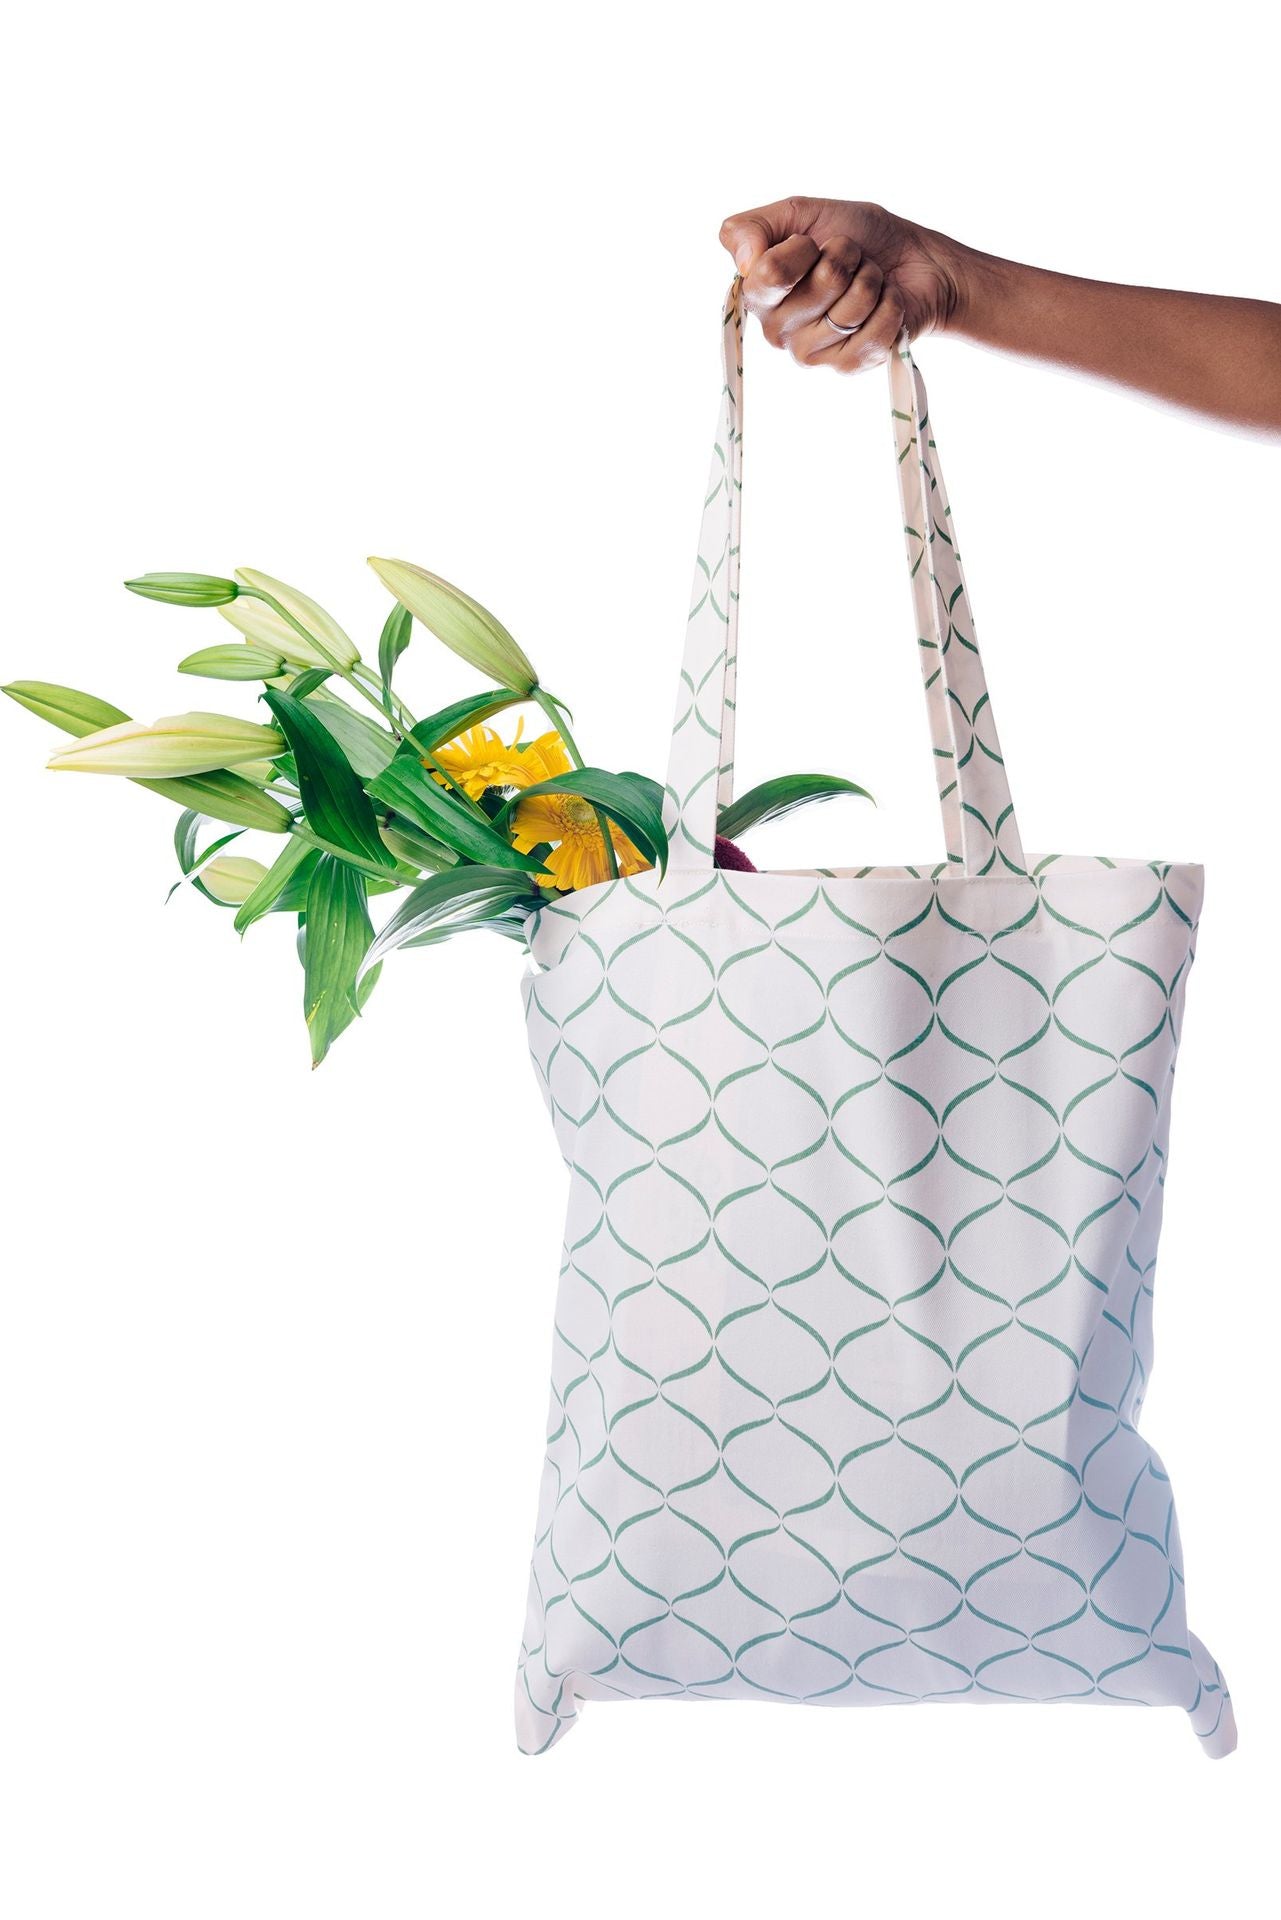 Swaas 100% Cotton Splash-Proof Ivory/Green Tote Bag for Women - hfnl!fe